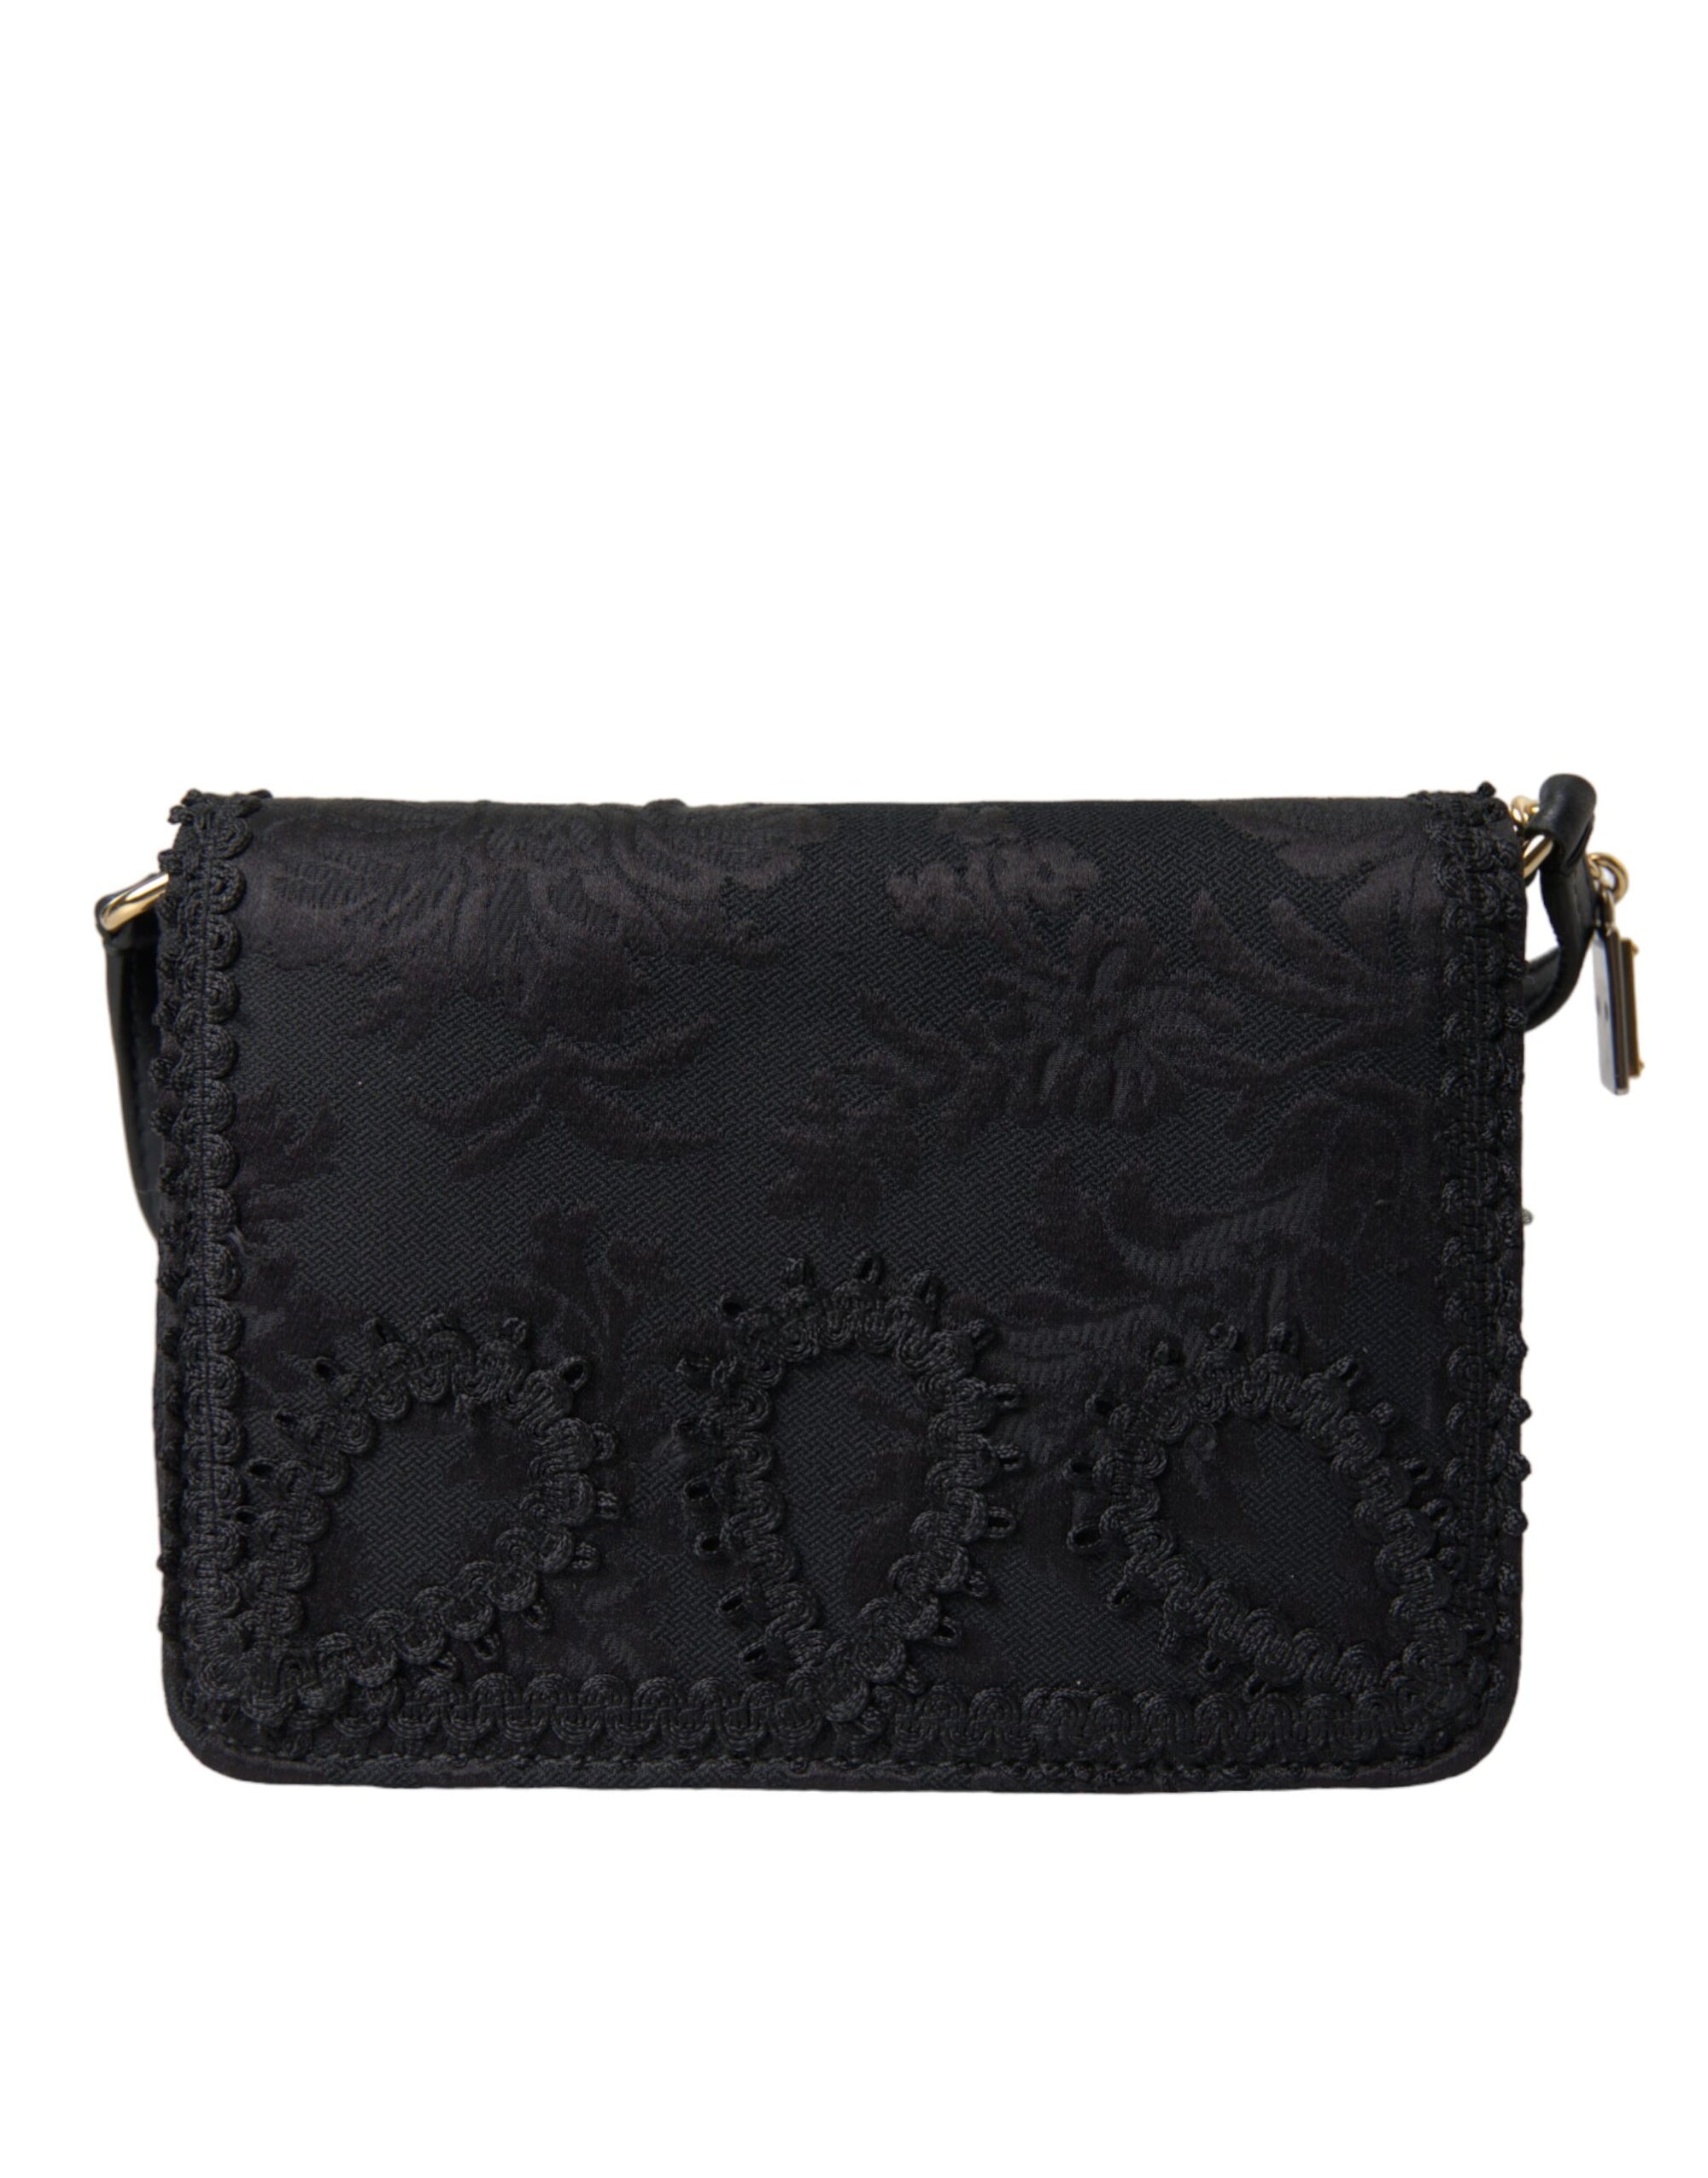 Elegant Gold-Black Baroque Fabric Crossbody Bag